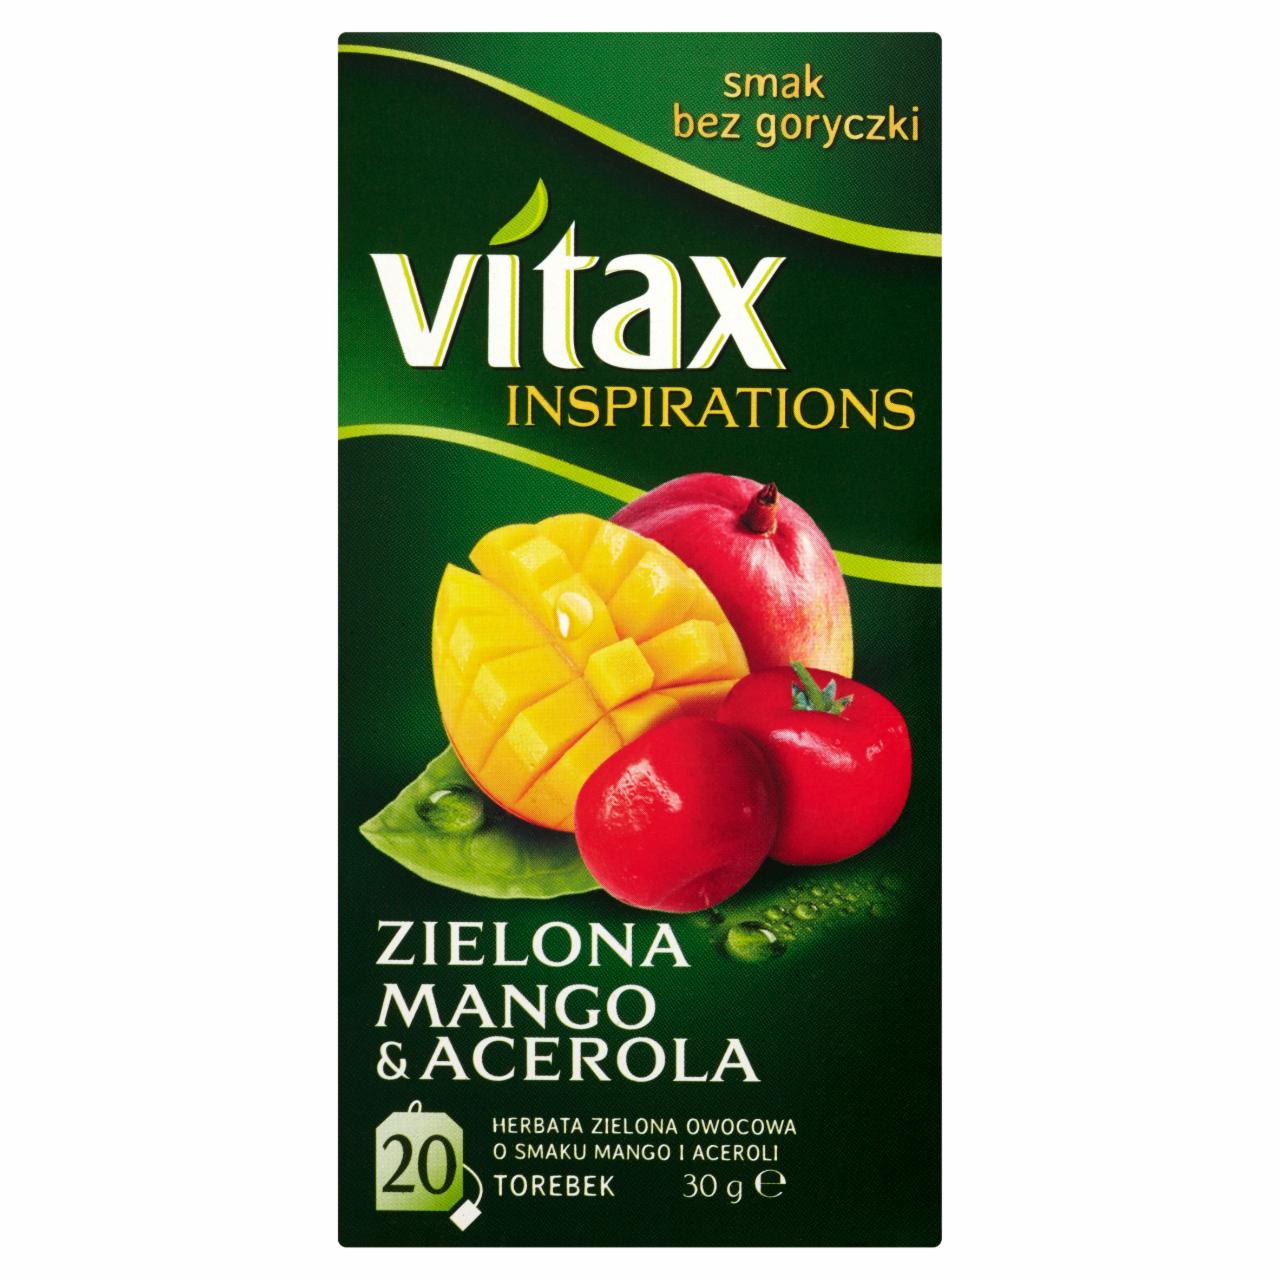 Zdjęcia - Vitax Inspirations Zielona Mango & Acerola Herbata zielona owocowa 30 g (20 torebek)